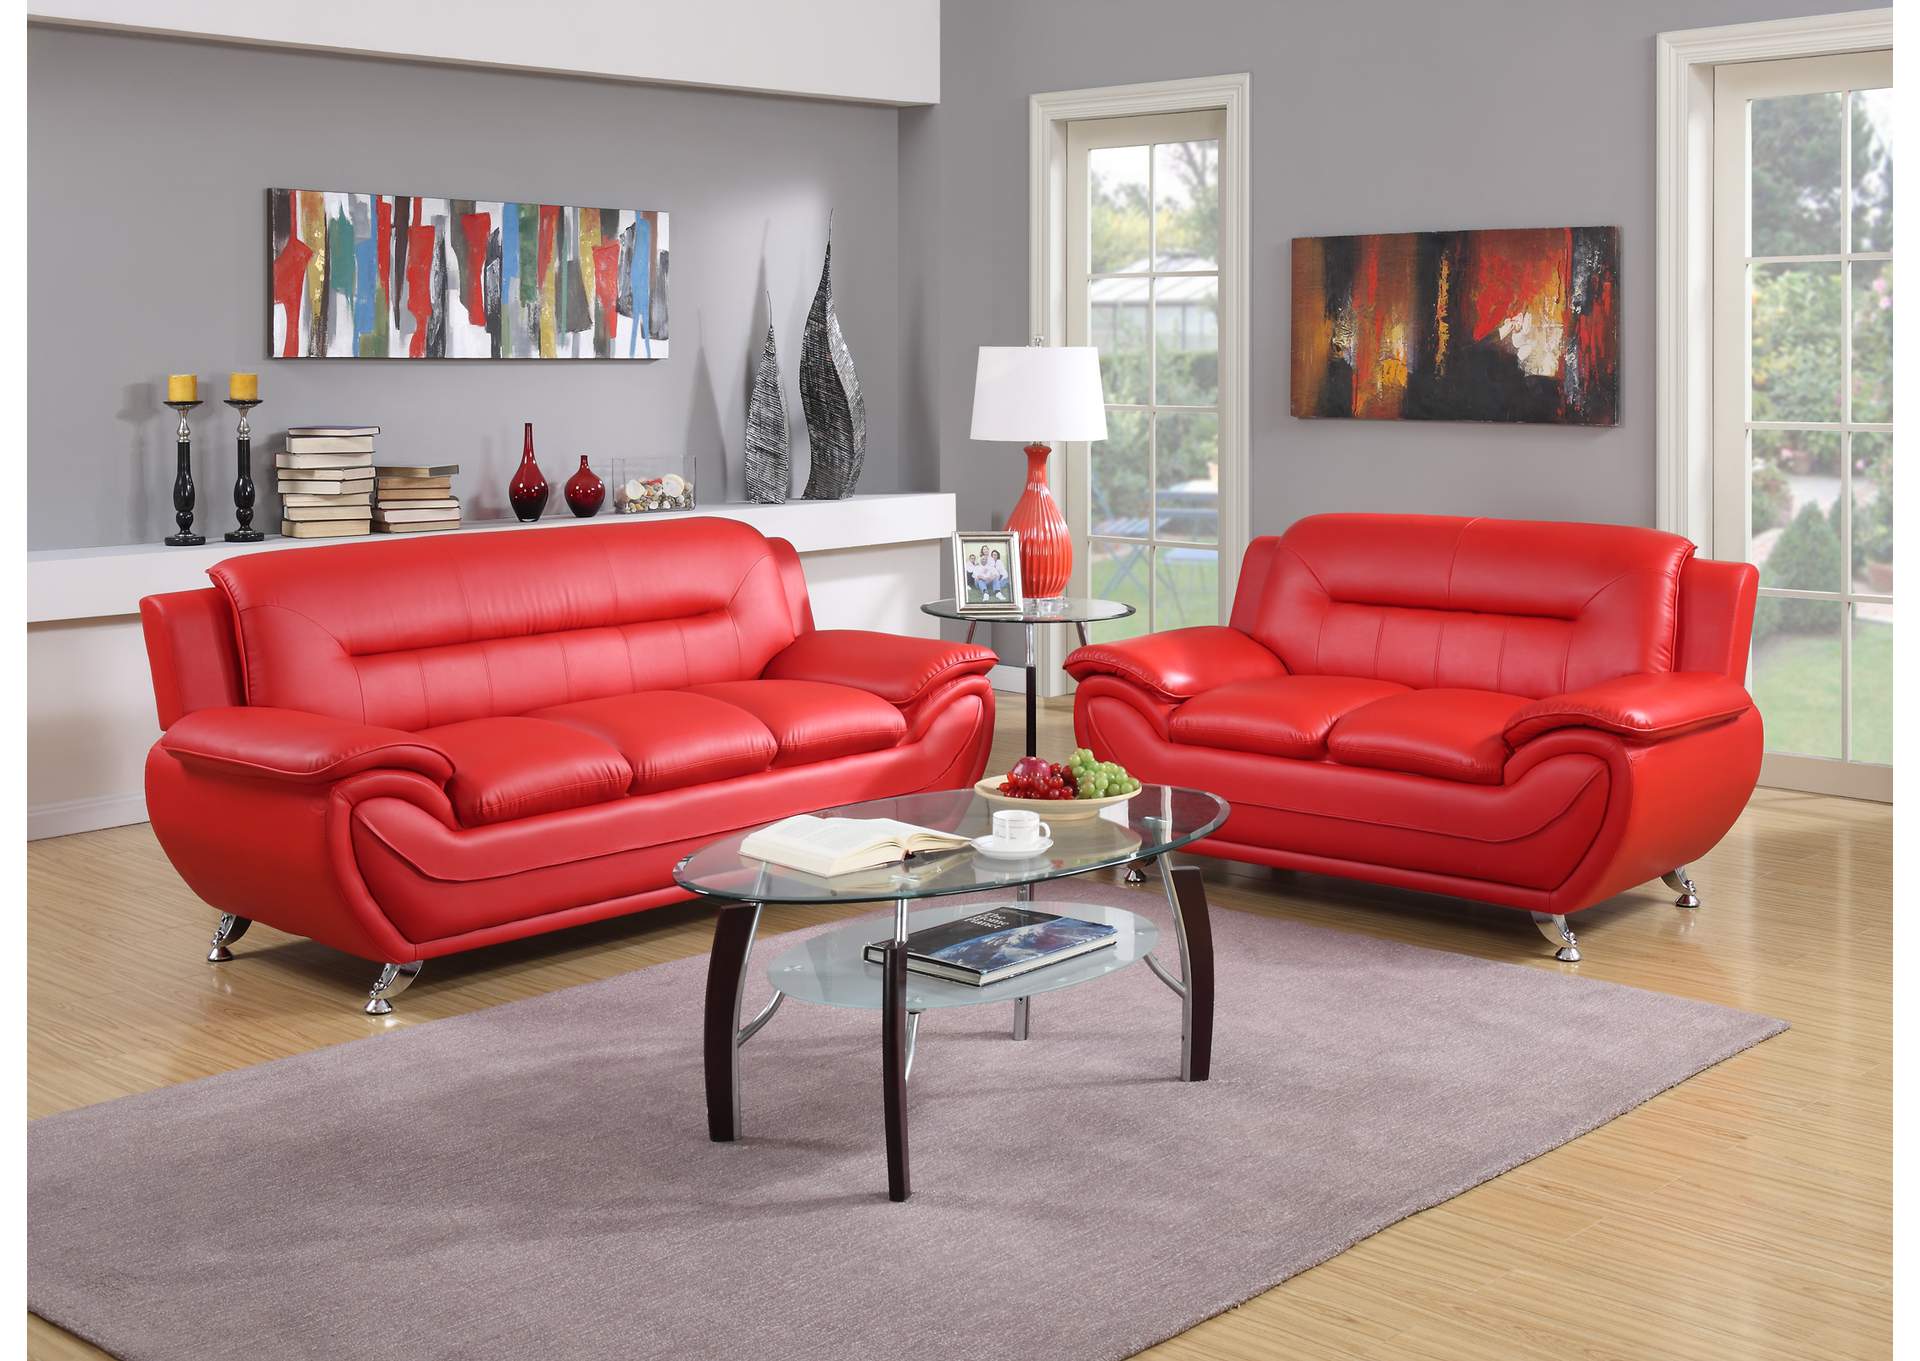 U2703 Red Faux Leather Sofa,Global Trading